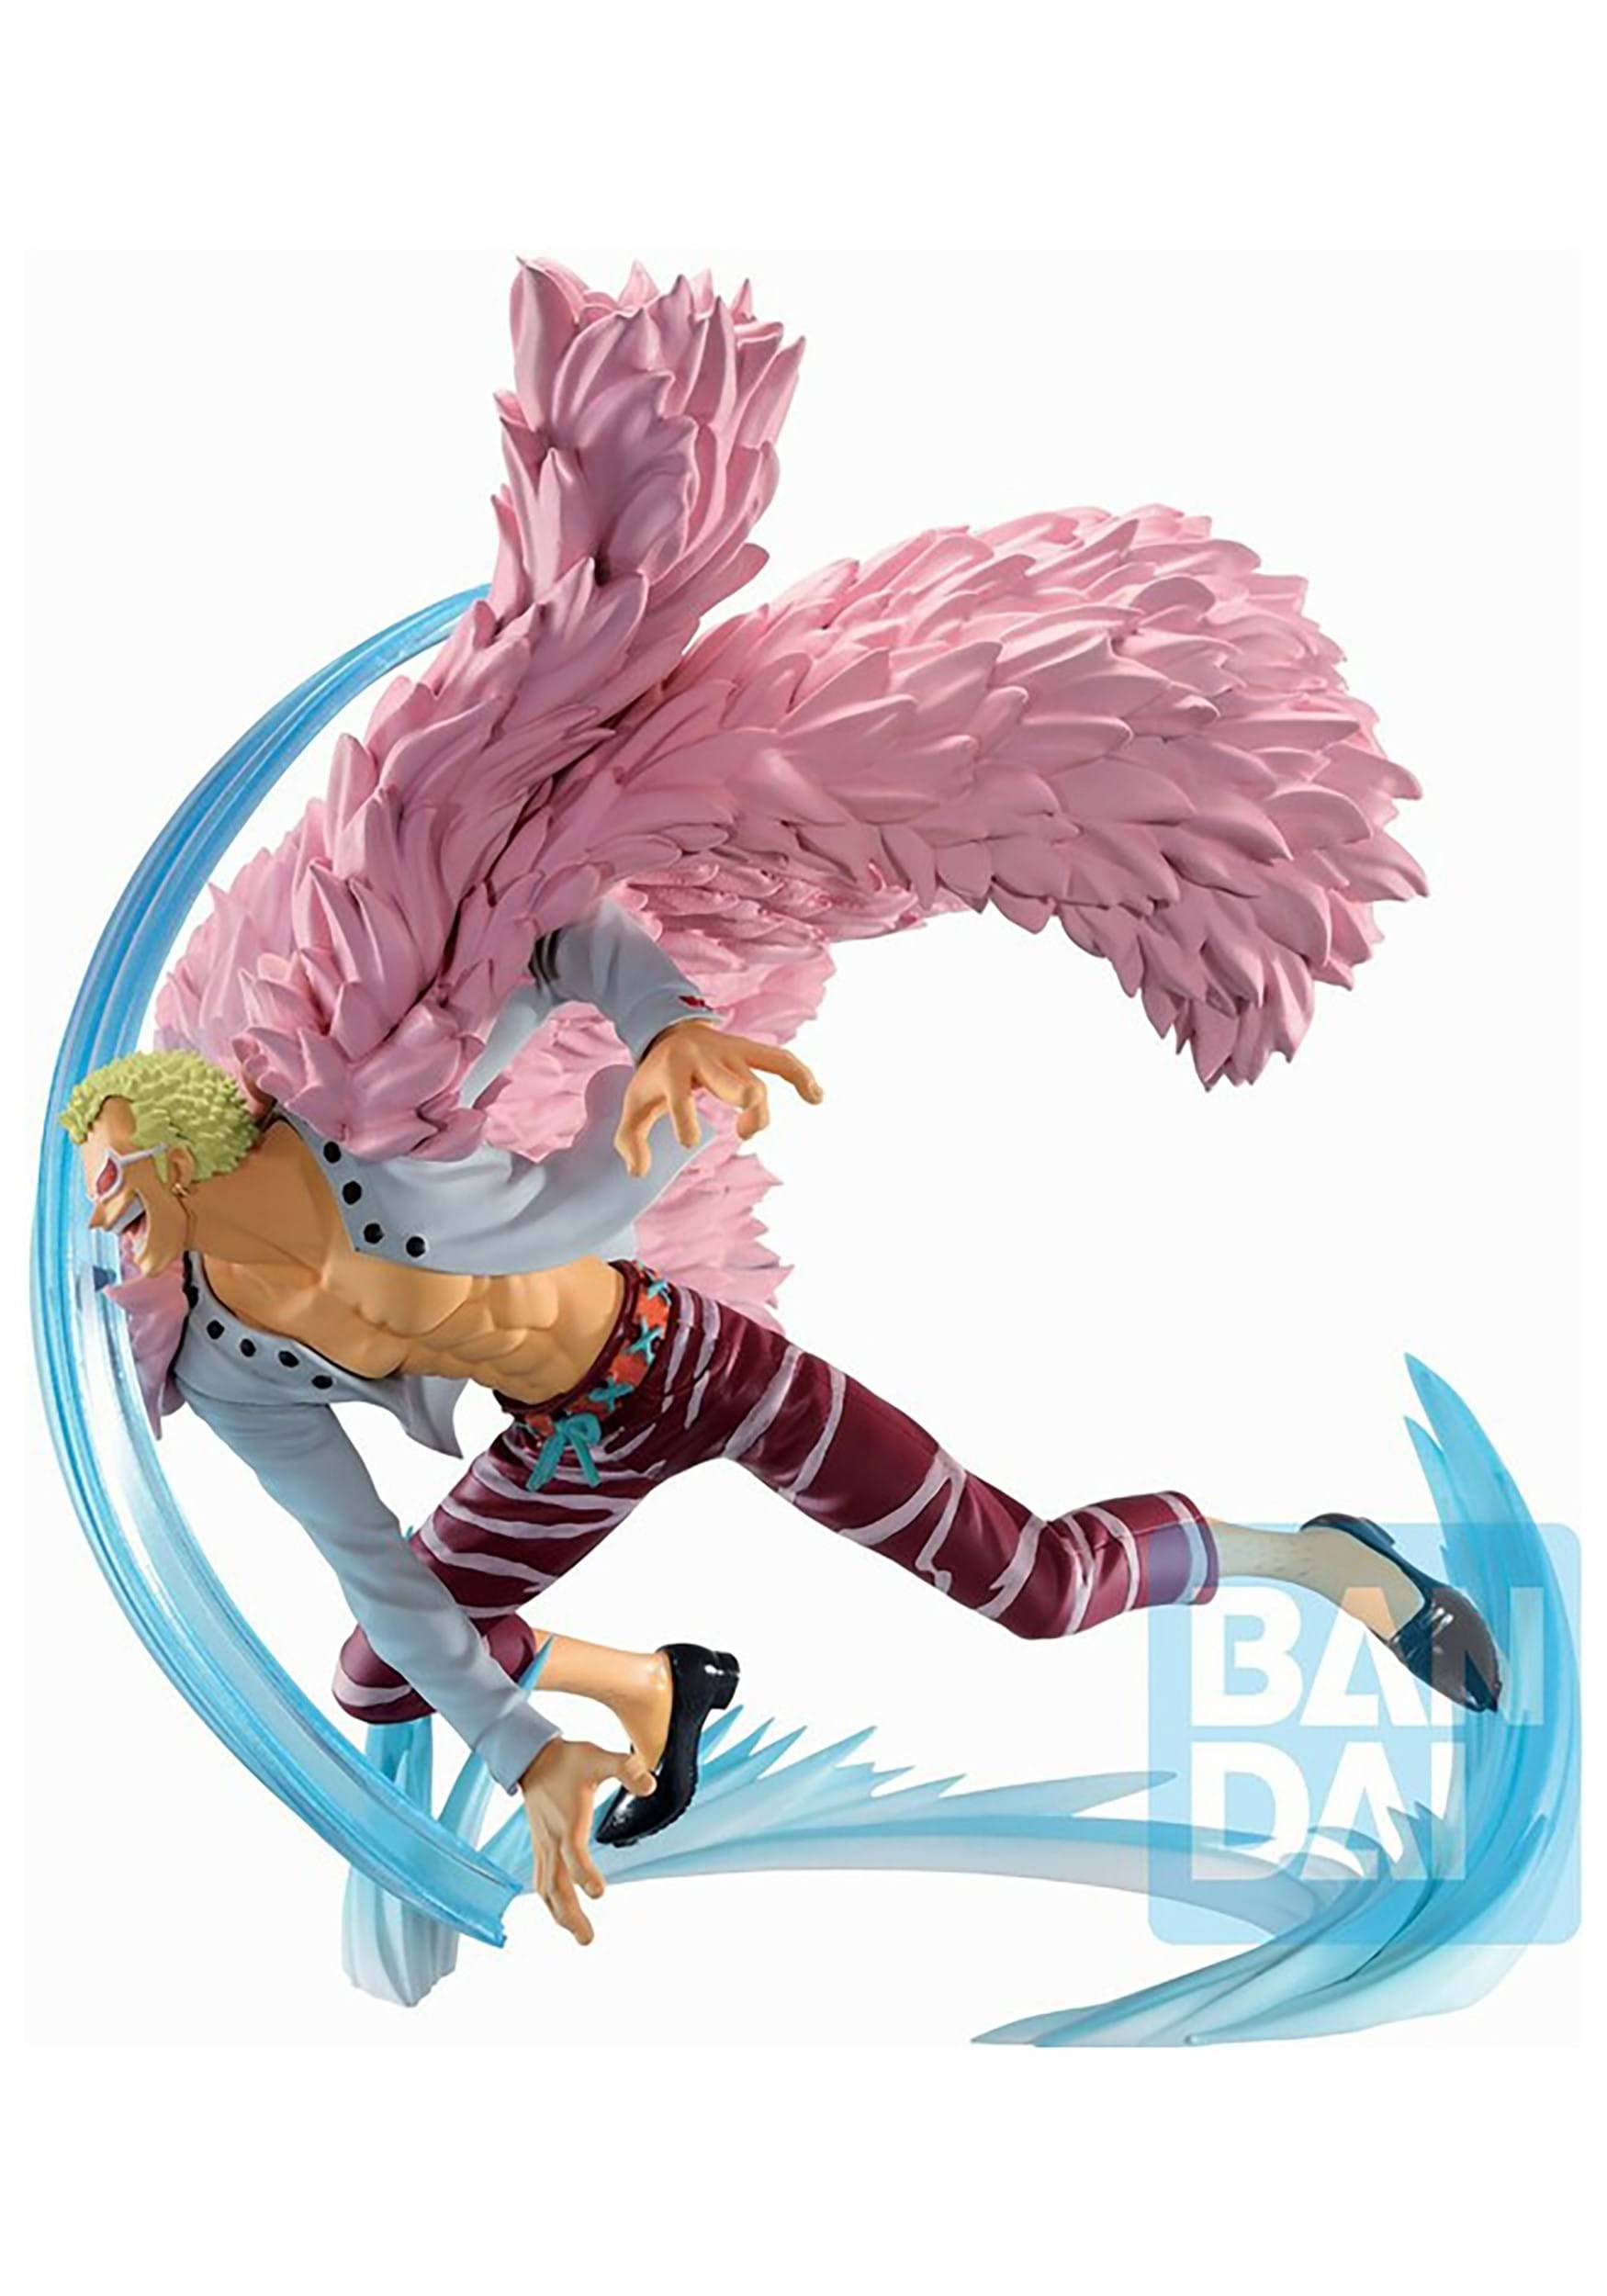  Funko Pop Animation: One Piece - Donquixote Doflamingo  Collectible Figure, Multicolor : Toys & Games